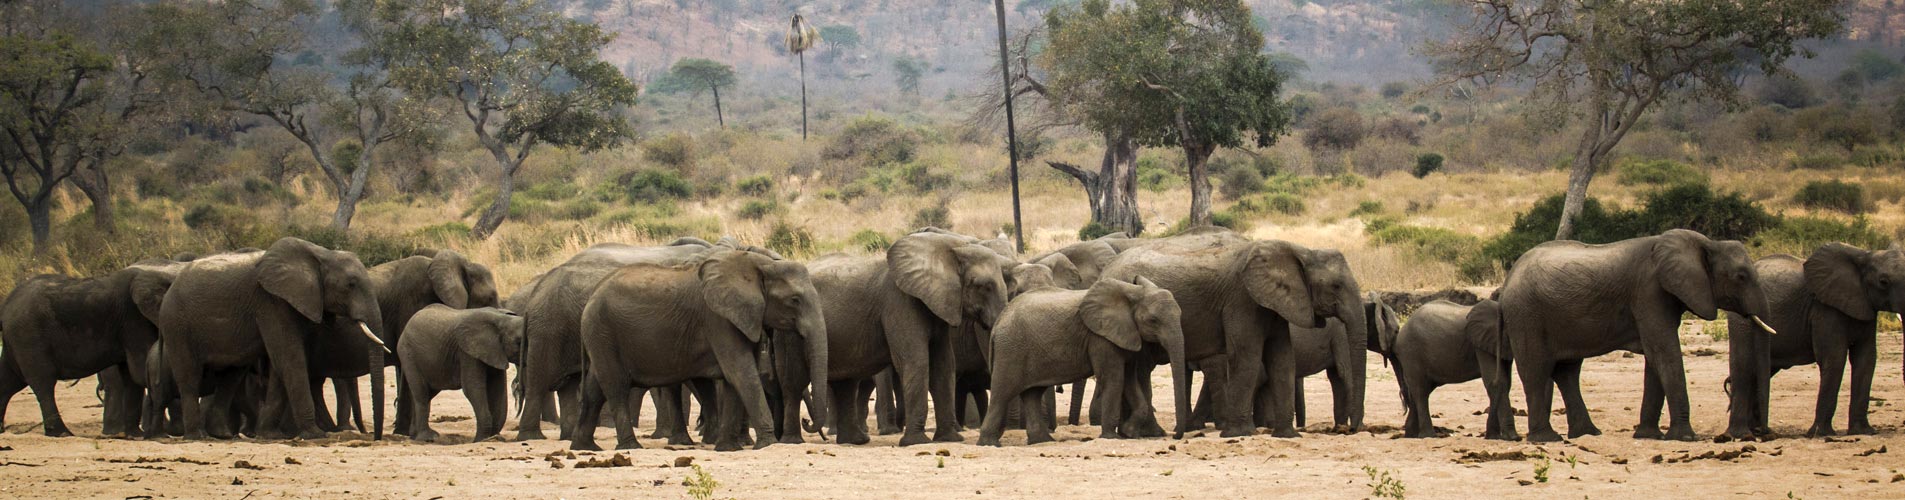 Tanzania Safari Elephants In Ruaha